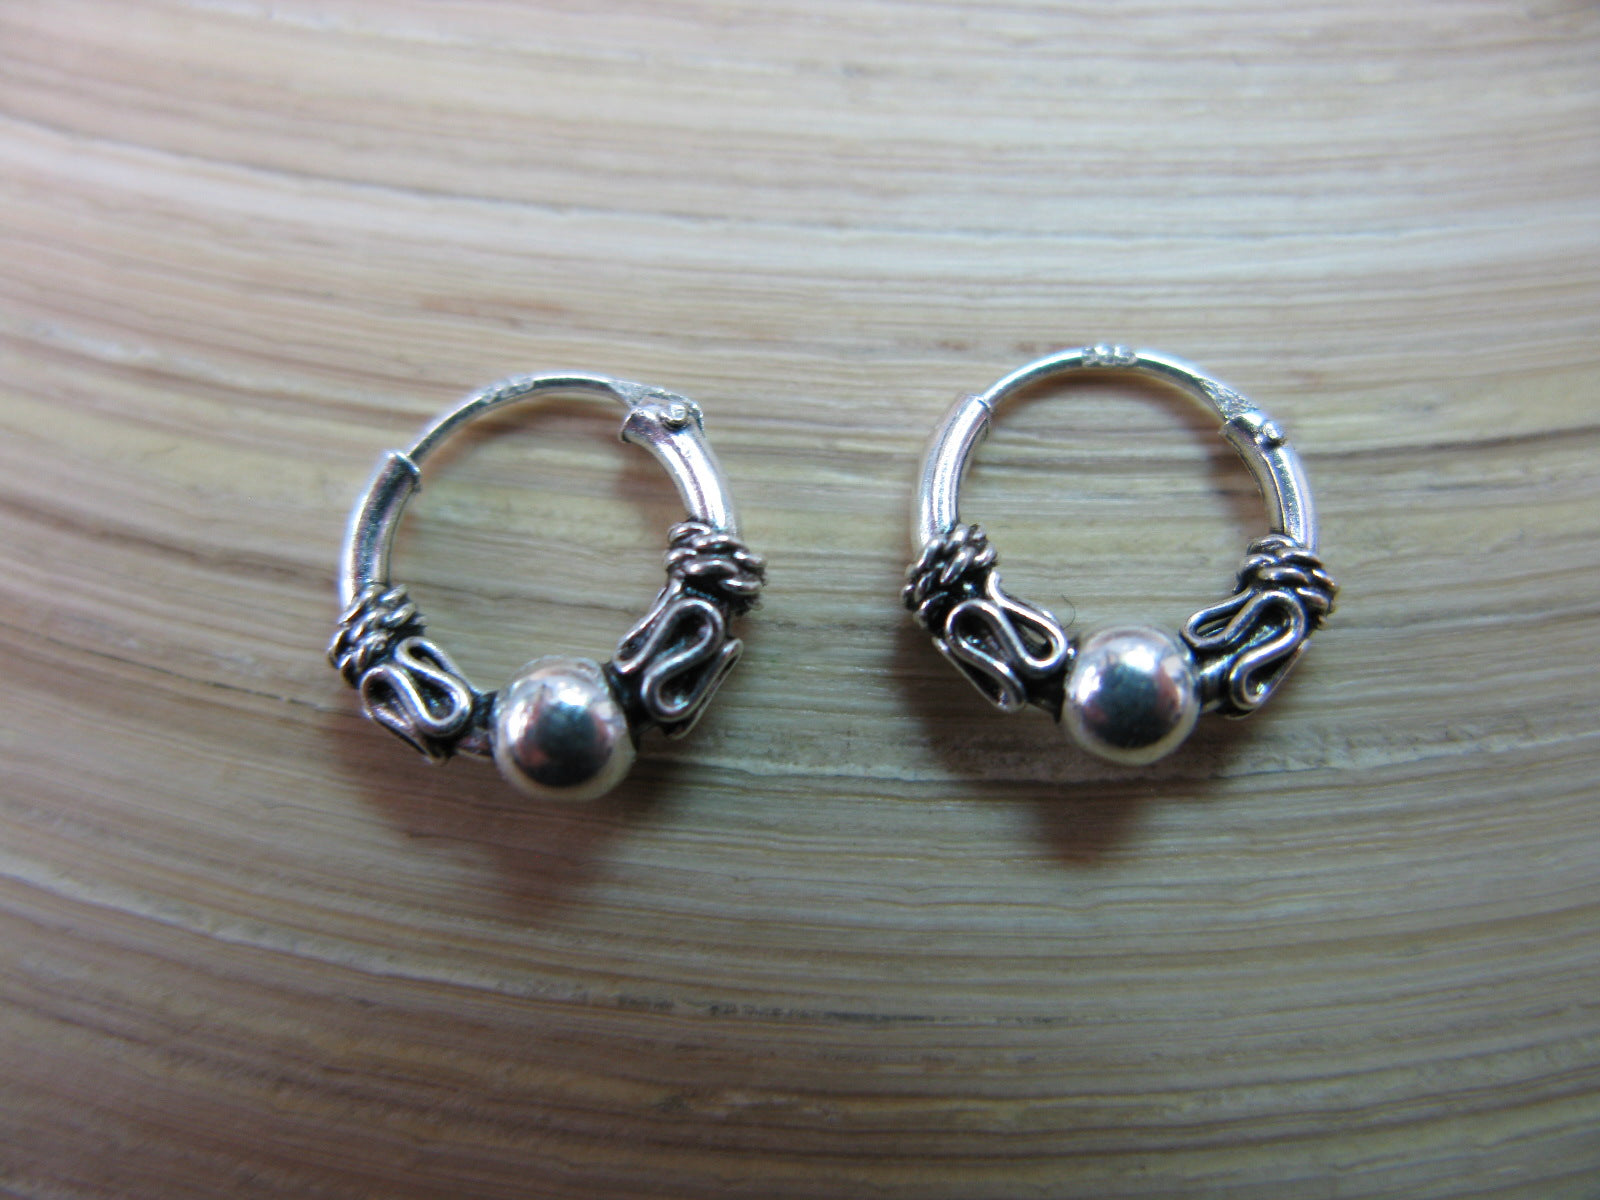 10mm Balinese Oxidized Hoop Earrings in 925 Sterling Silver